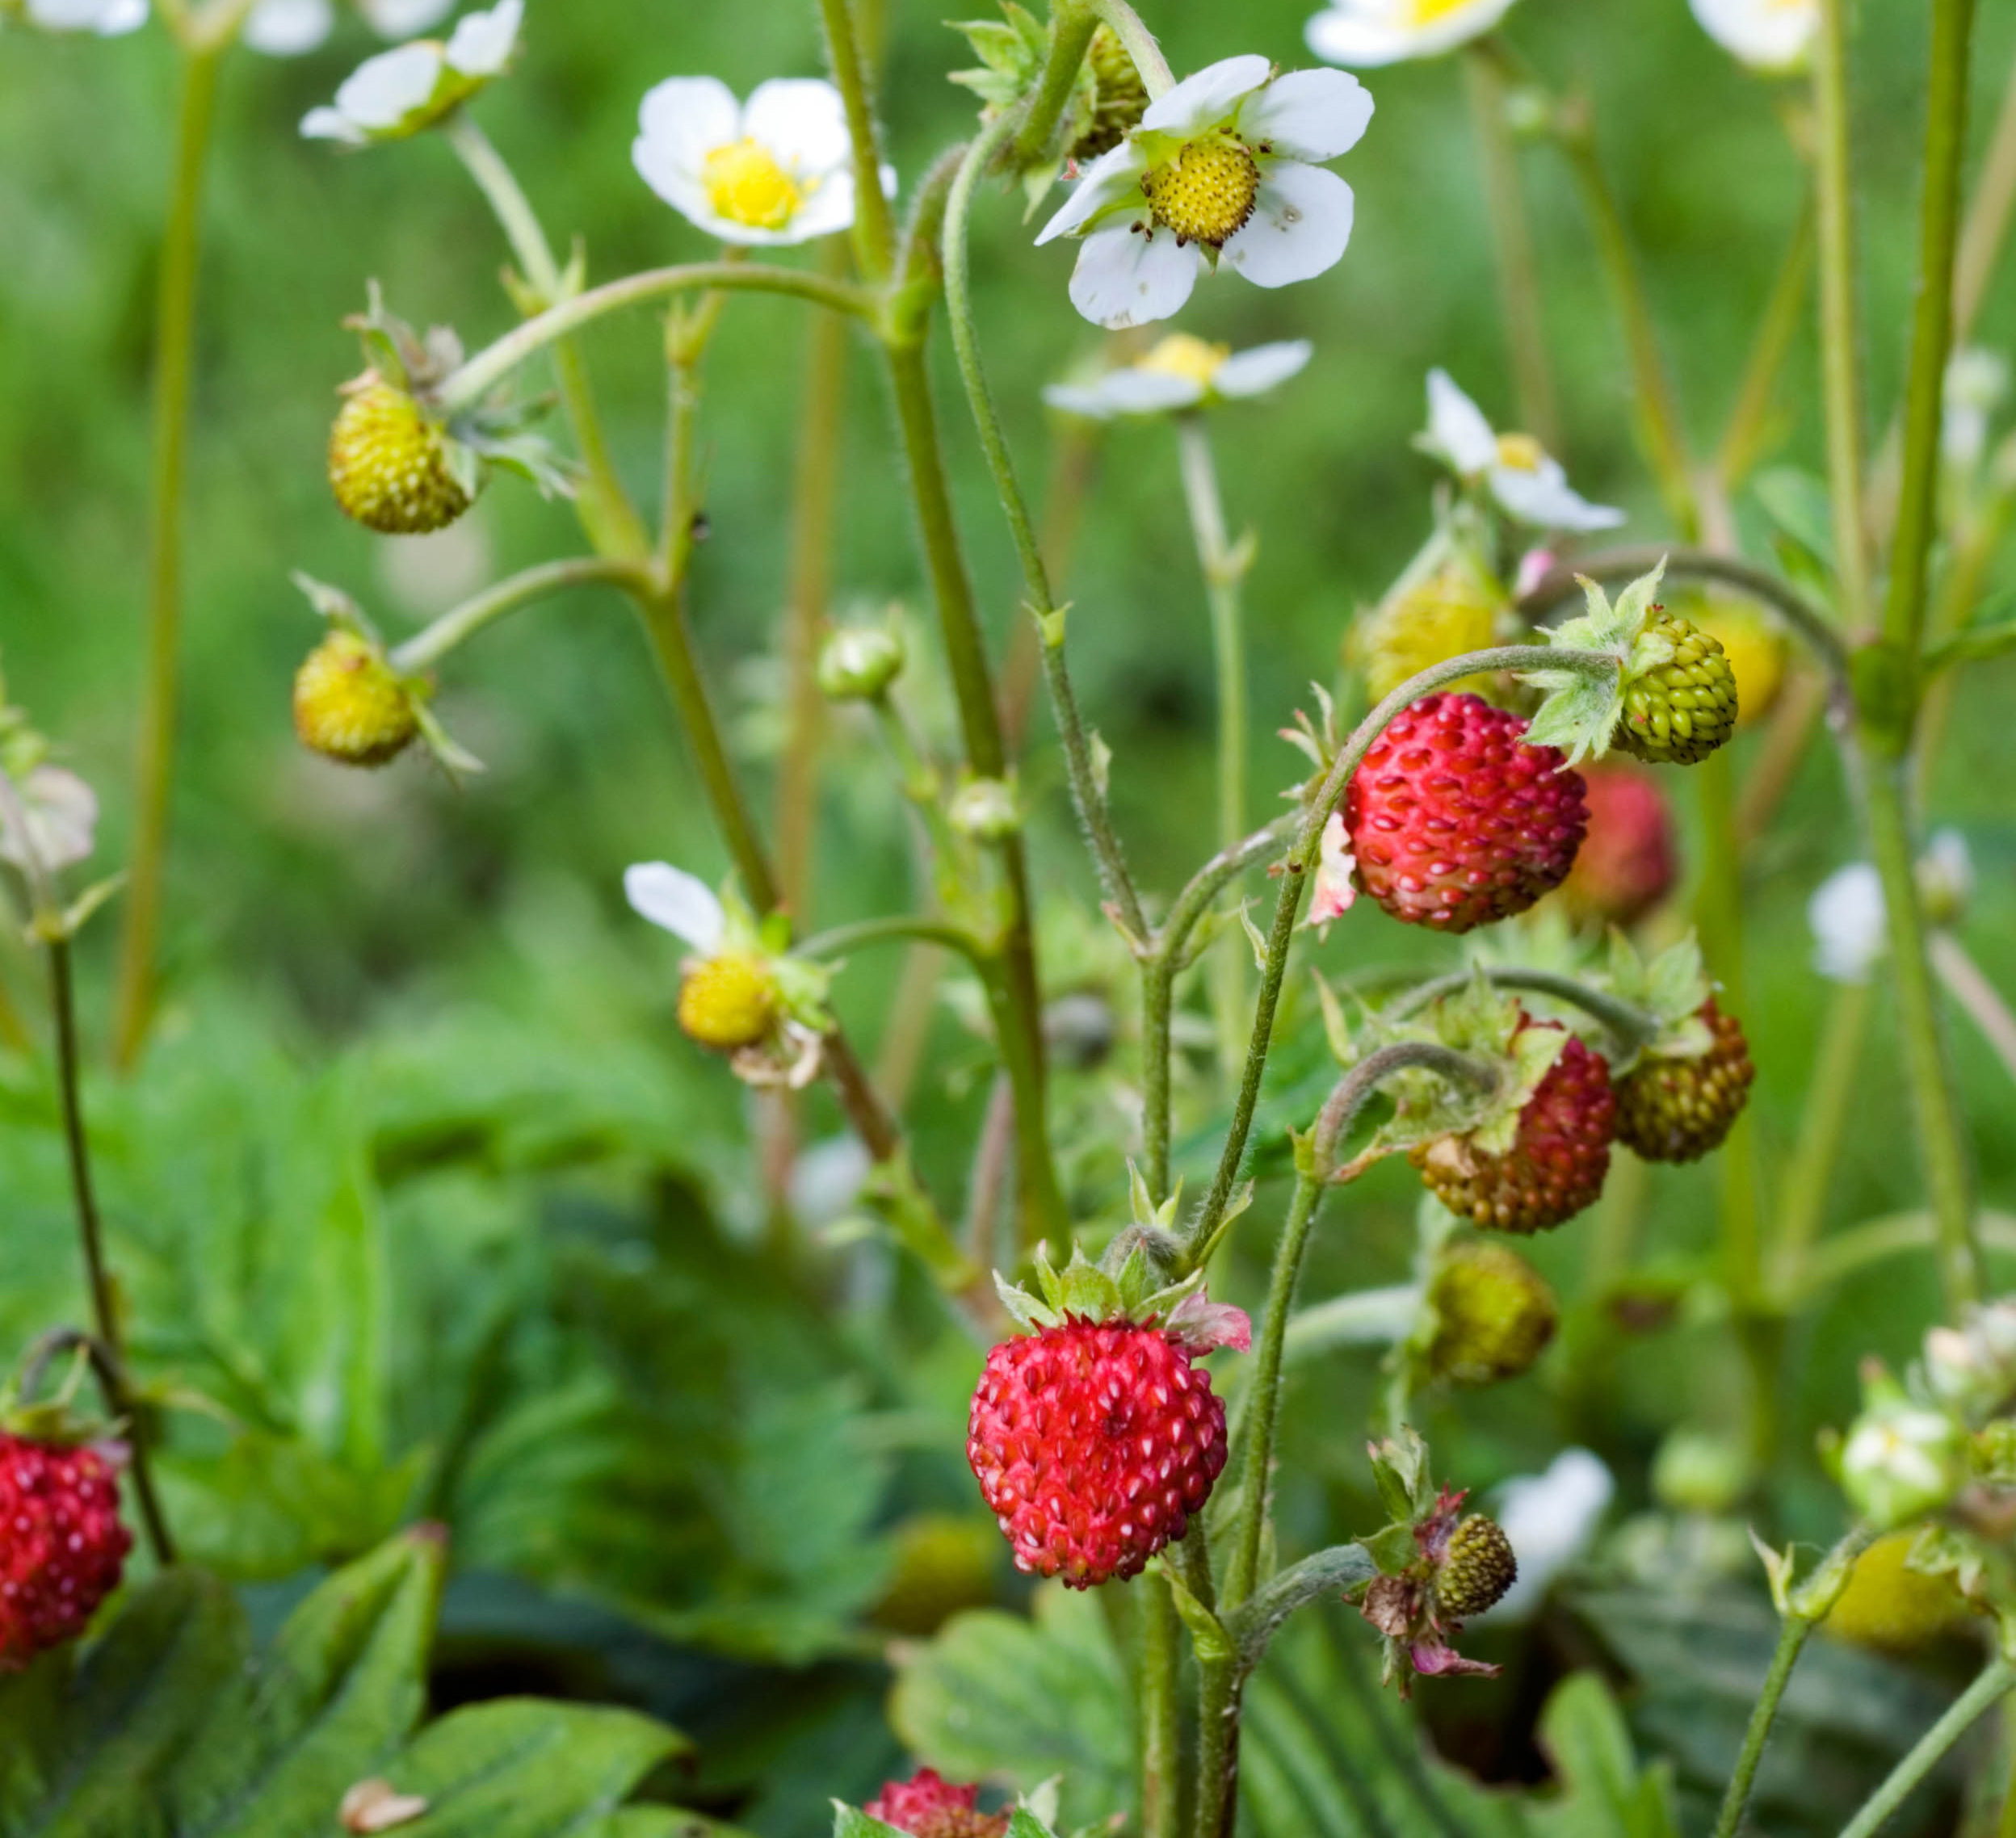 Growing wild alpine strawberries